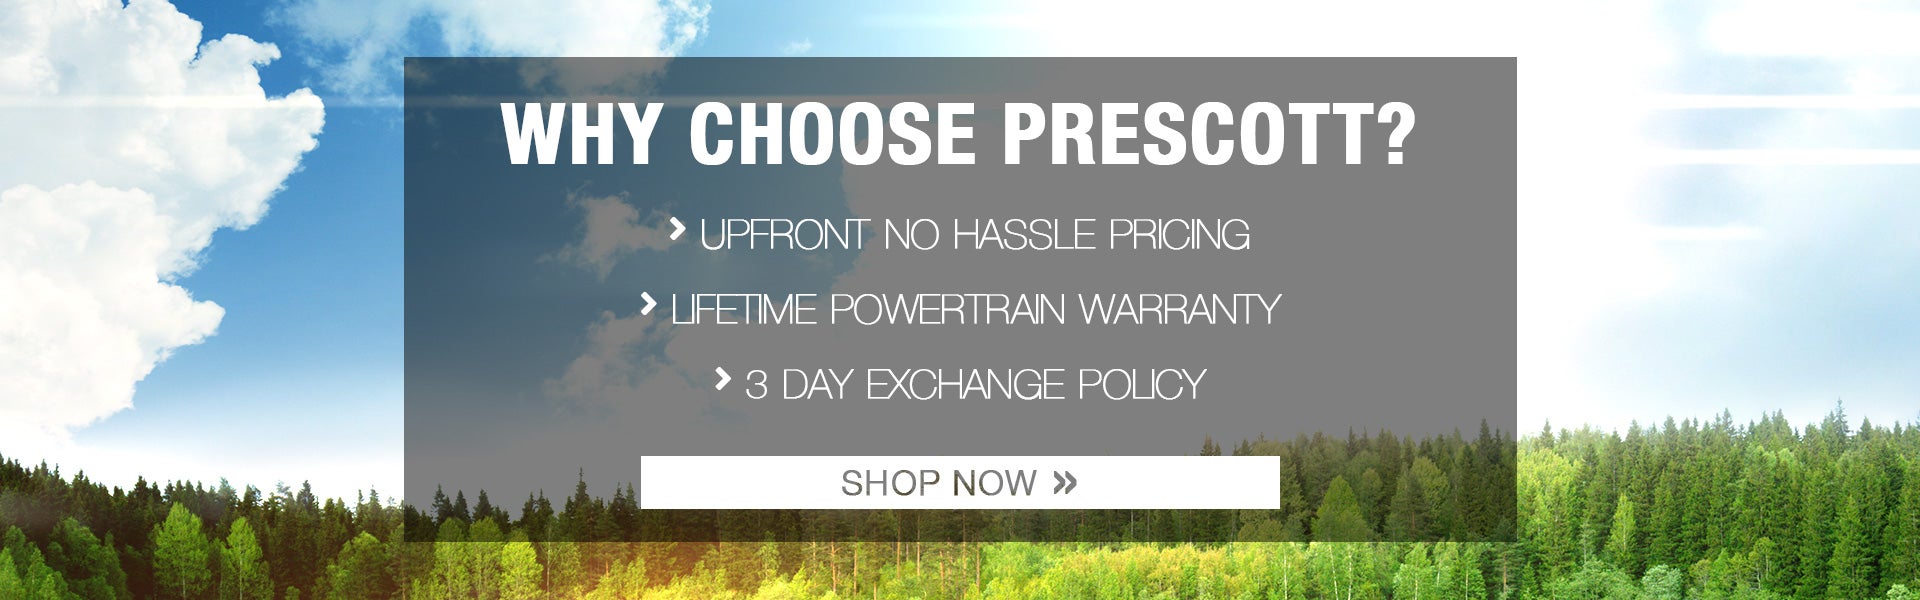 Why Choose Prescott?